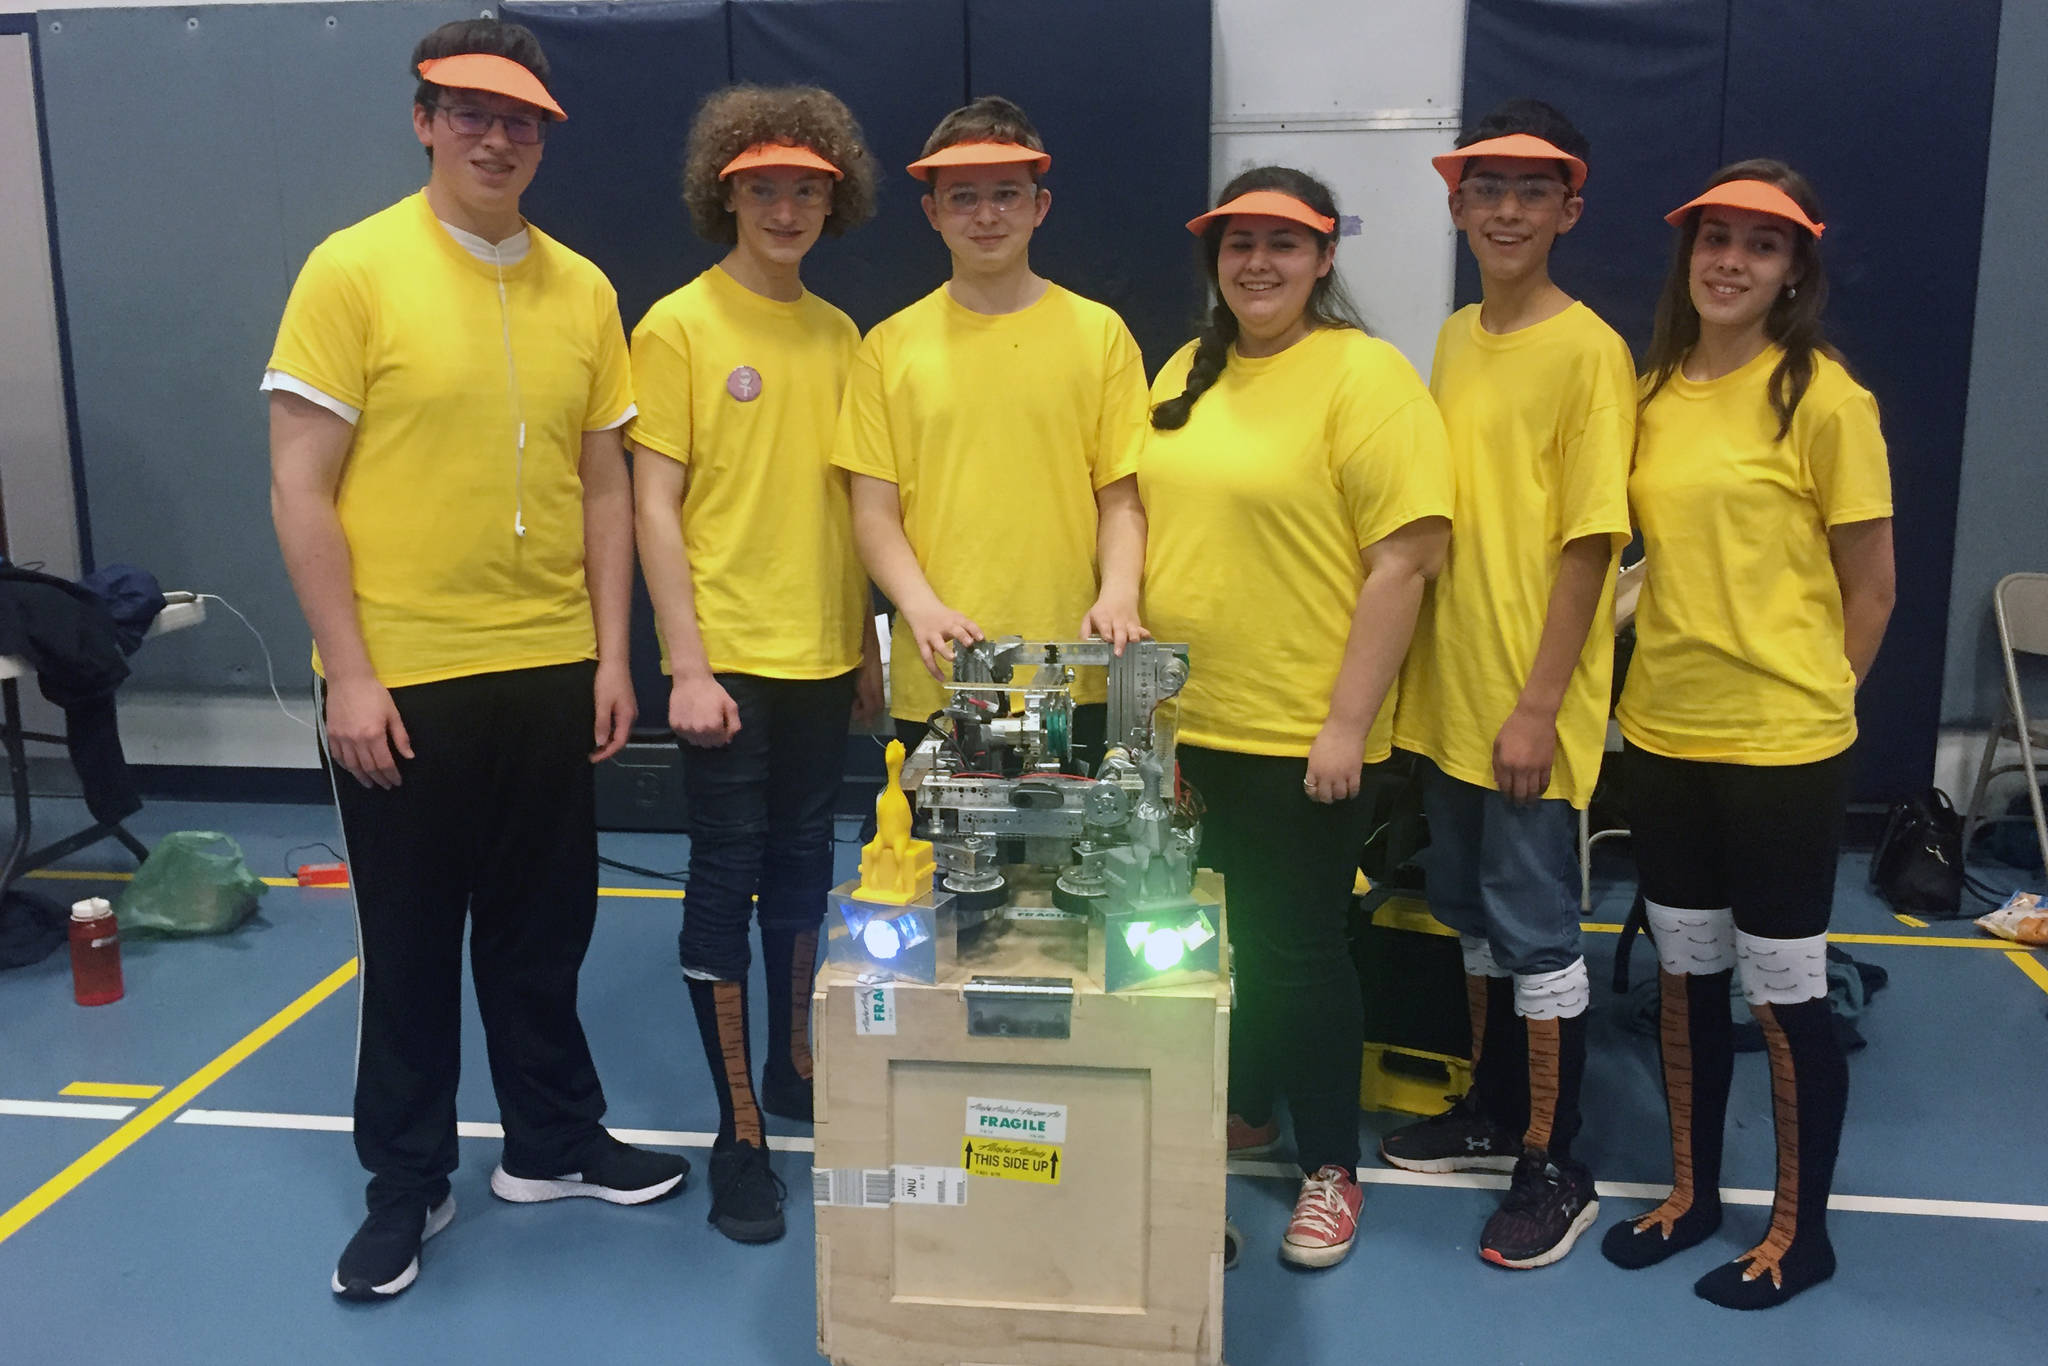 Thunder Mountain sweeps regional robotics competition